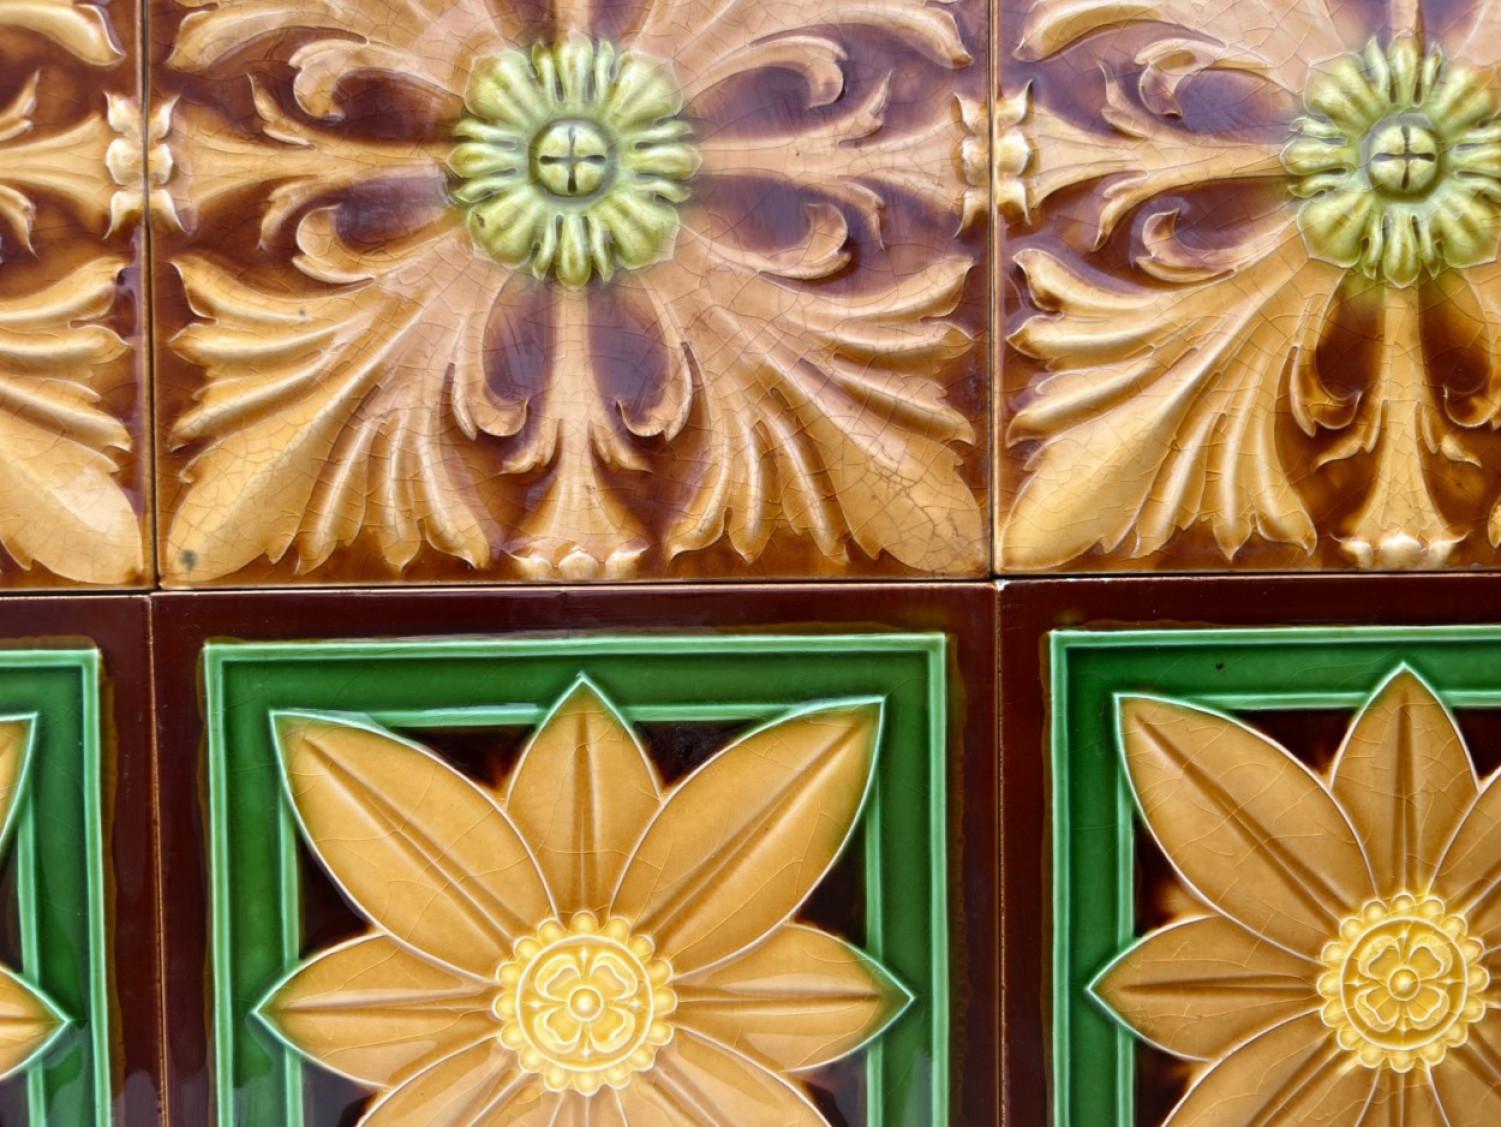 Mixed Art Deco Relief Tiles by Gilliot, Hemiksem, circa 1920 In Good Condition For Sale In Rijssen, NL